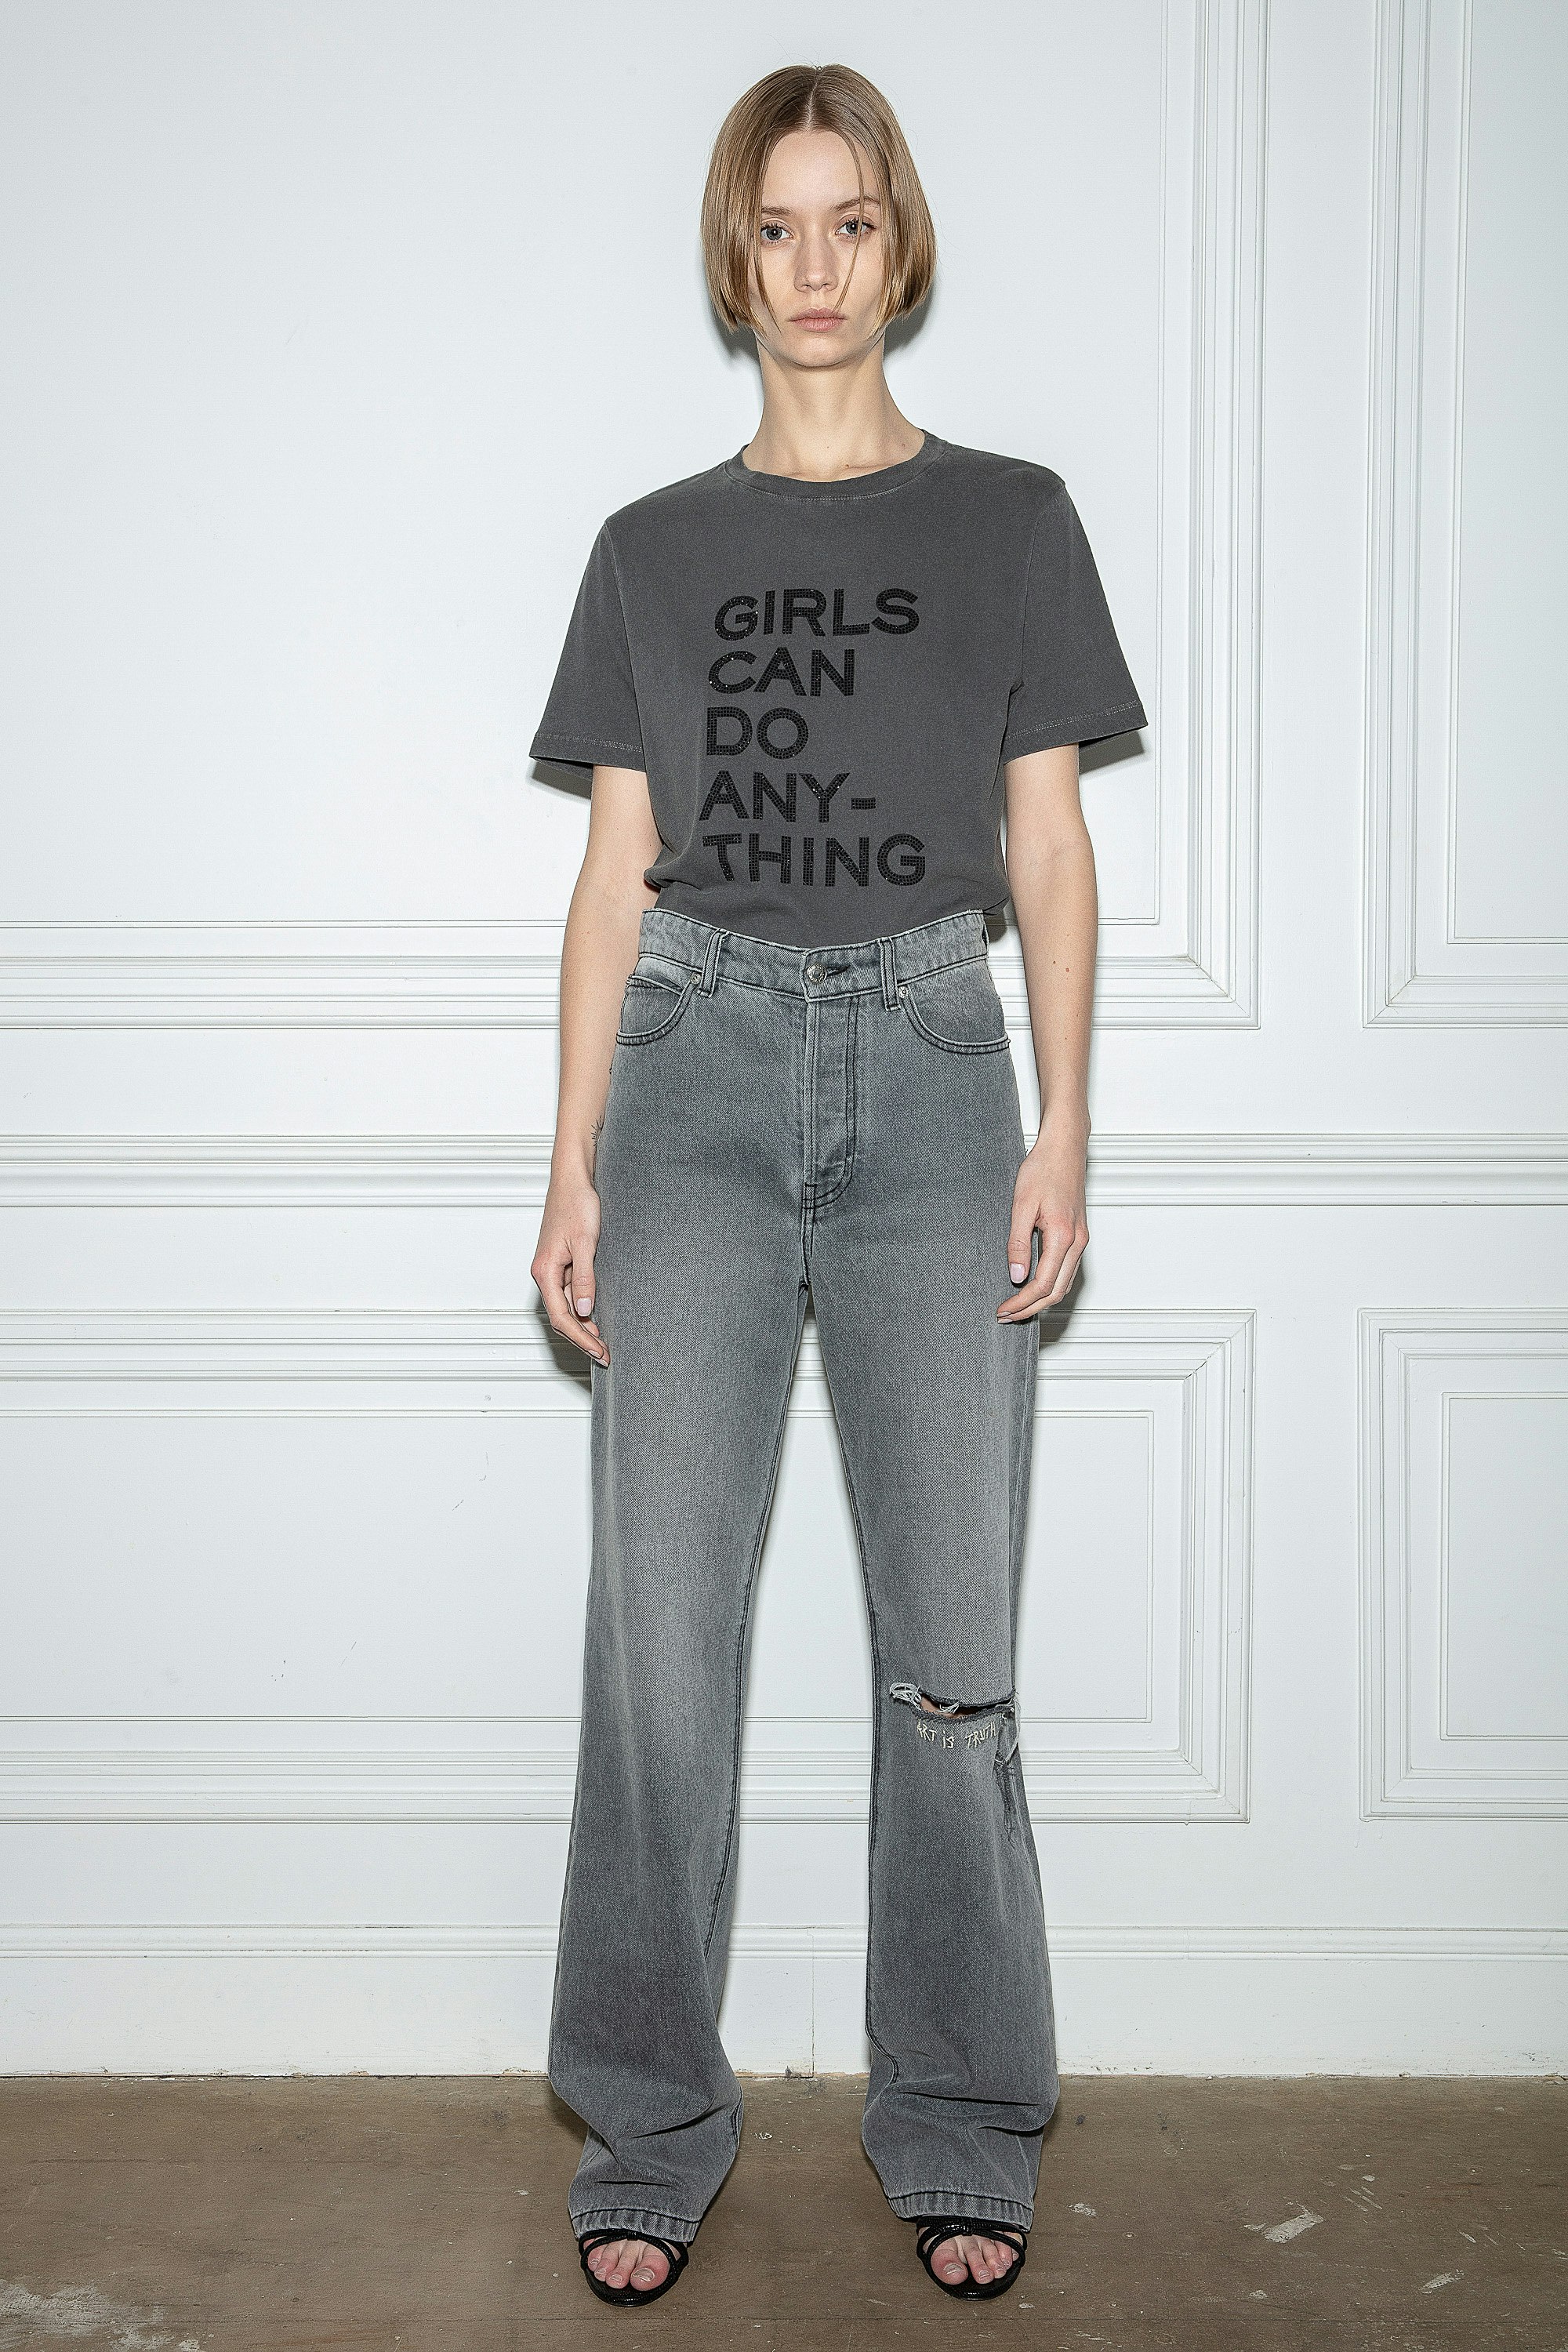 Camiseta Bella Camiseta gris de algodón para mujer con mensaje «Girls can do anything» engastado con cristales